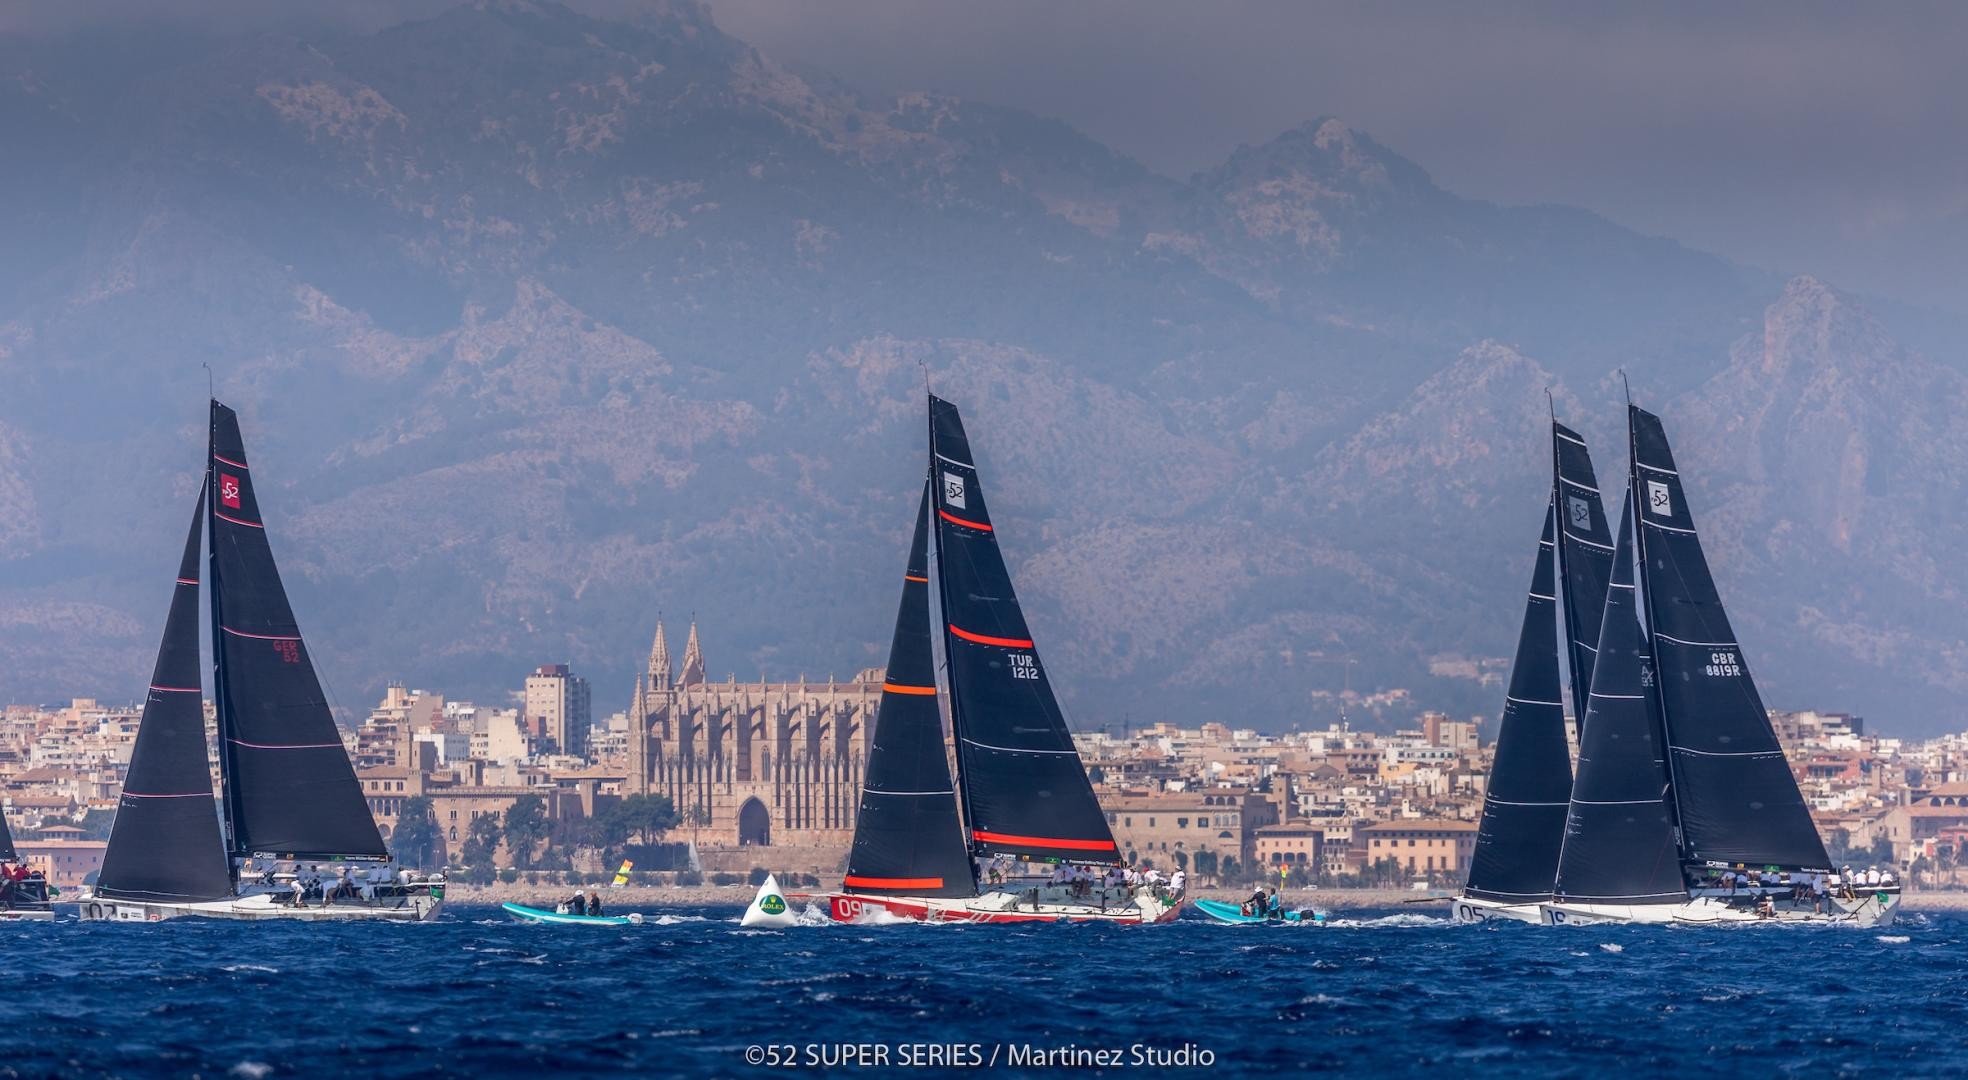 52 Super Series returns to action in Puerto Portals Mallorca 